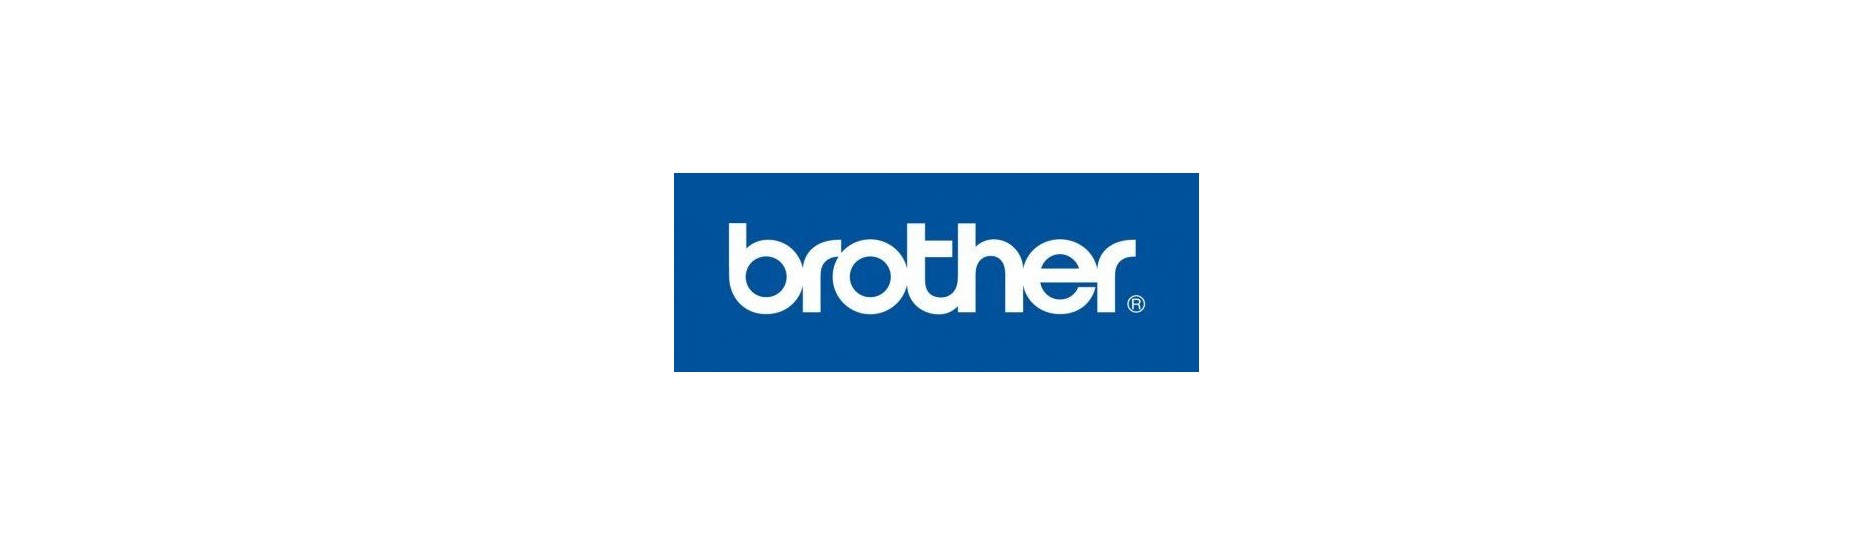 Brother DK Labels